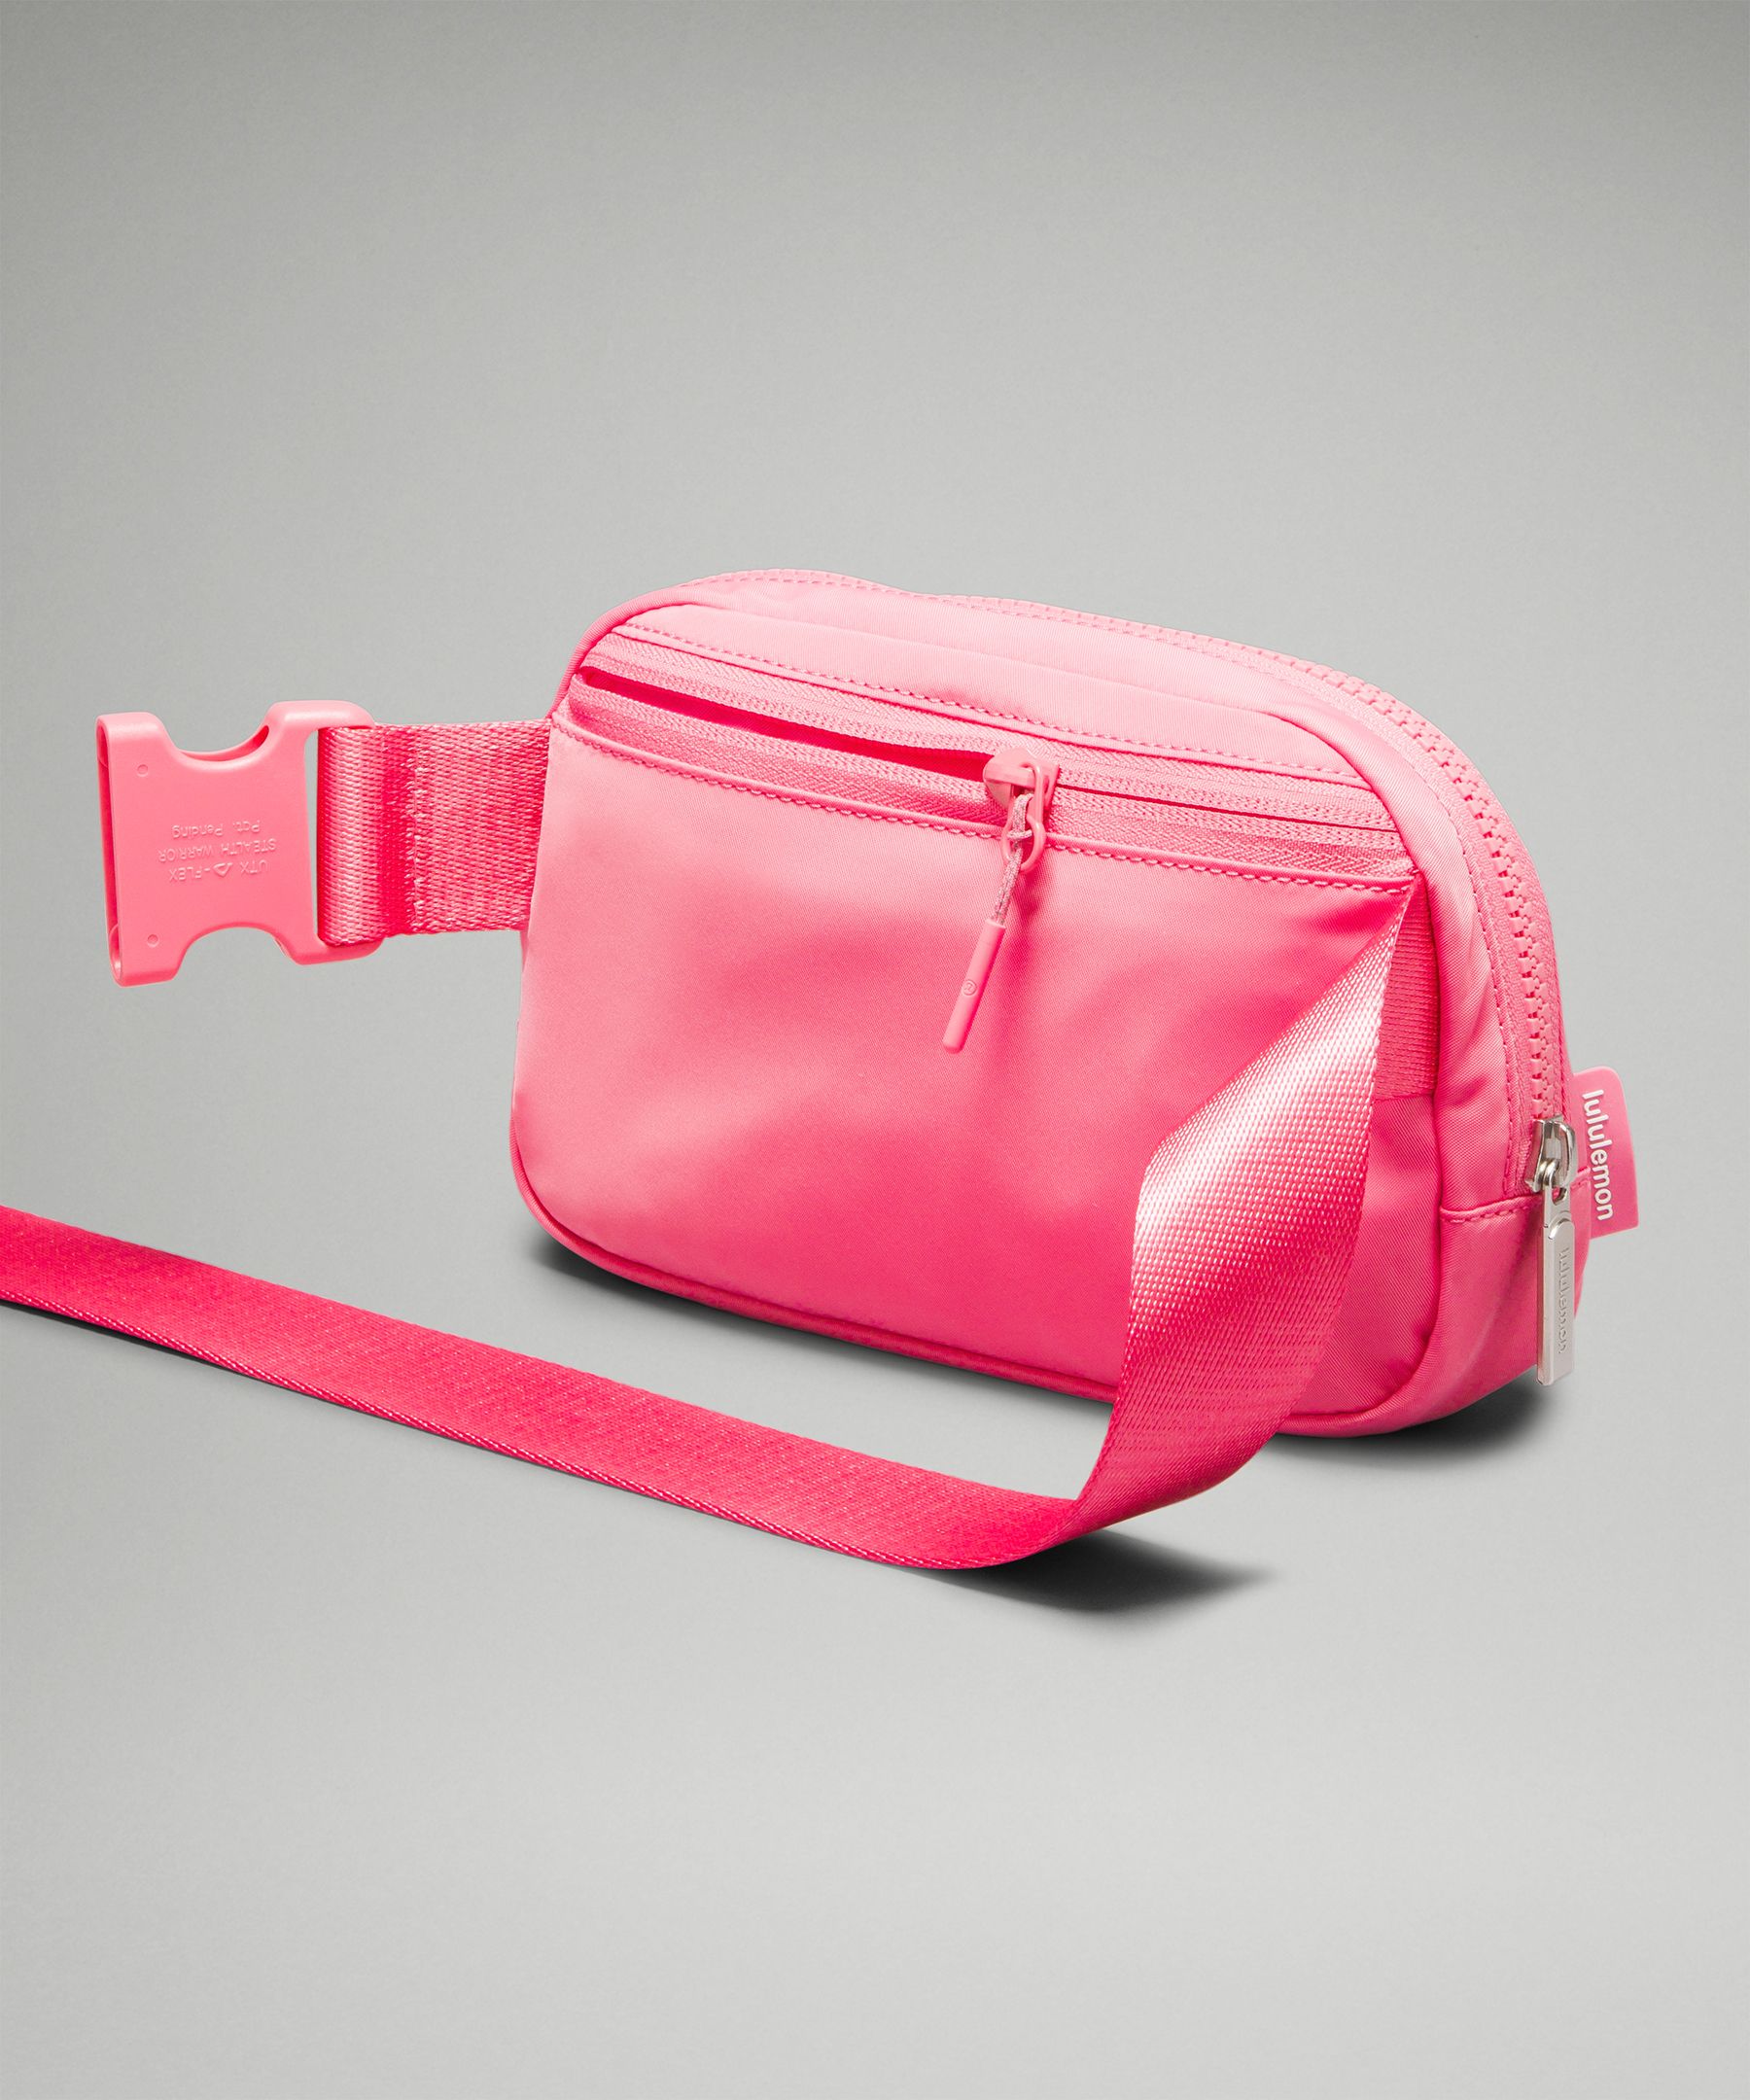 Lululemon Everywhere Belt Bag 1L Pink Clay Pink Pastel PCLY/PNPA